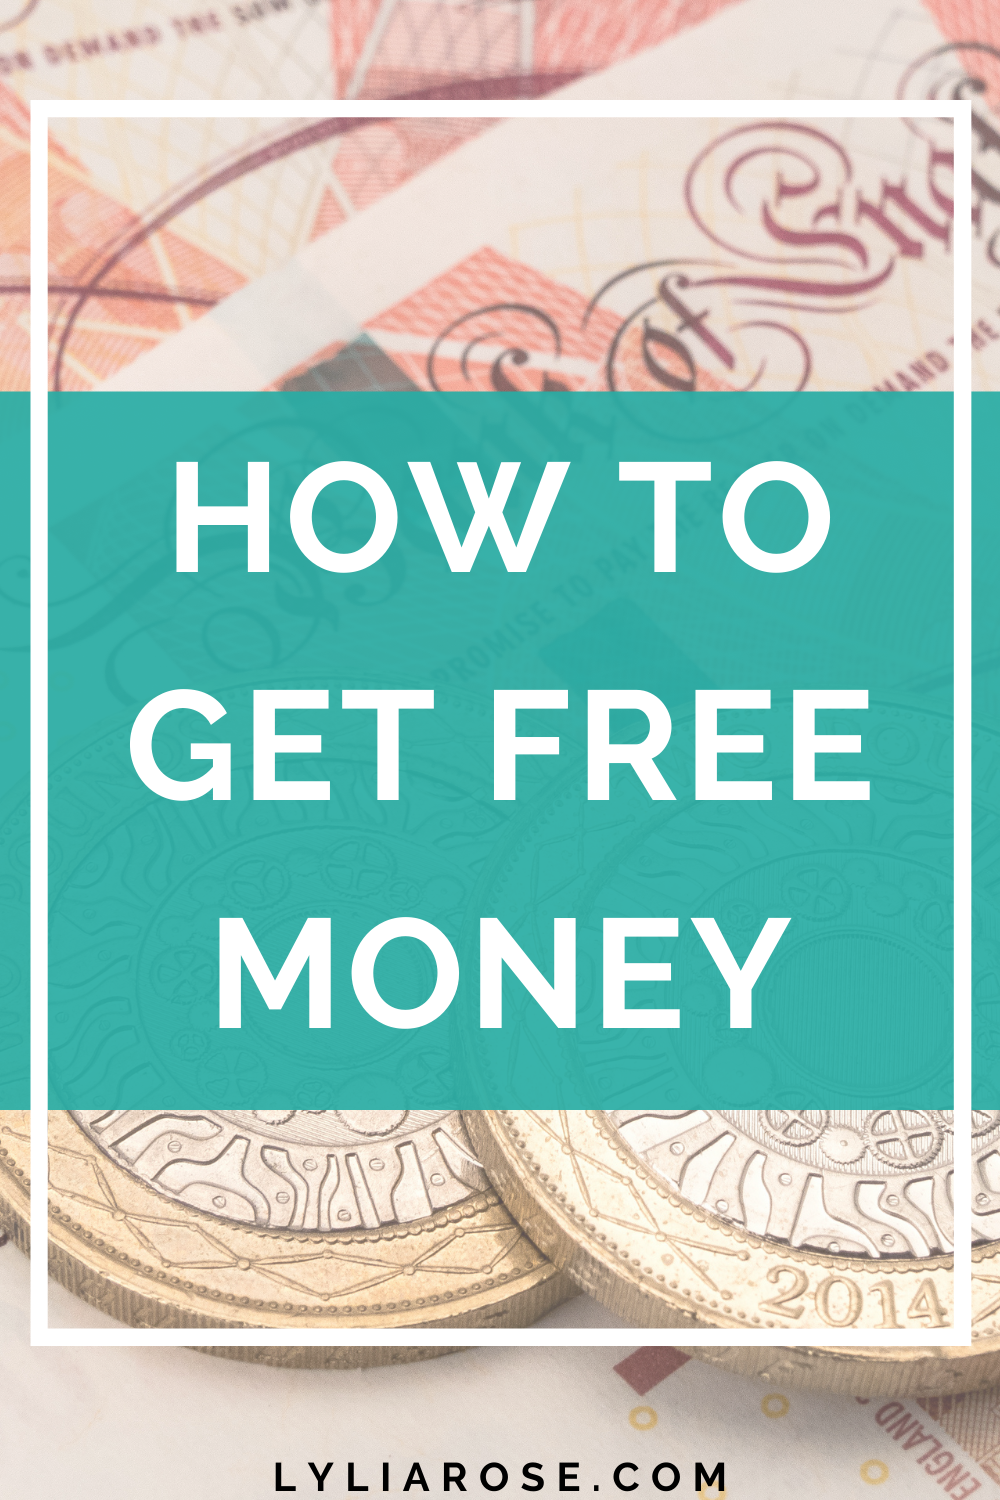 How to get free money UK